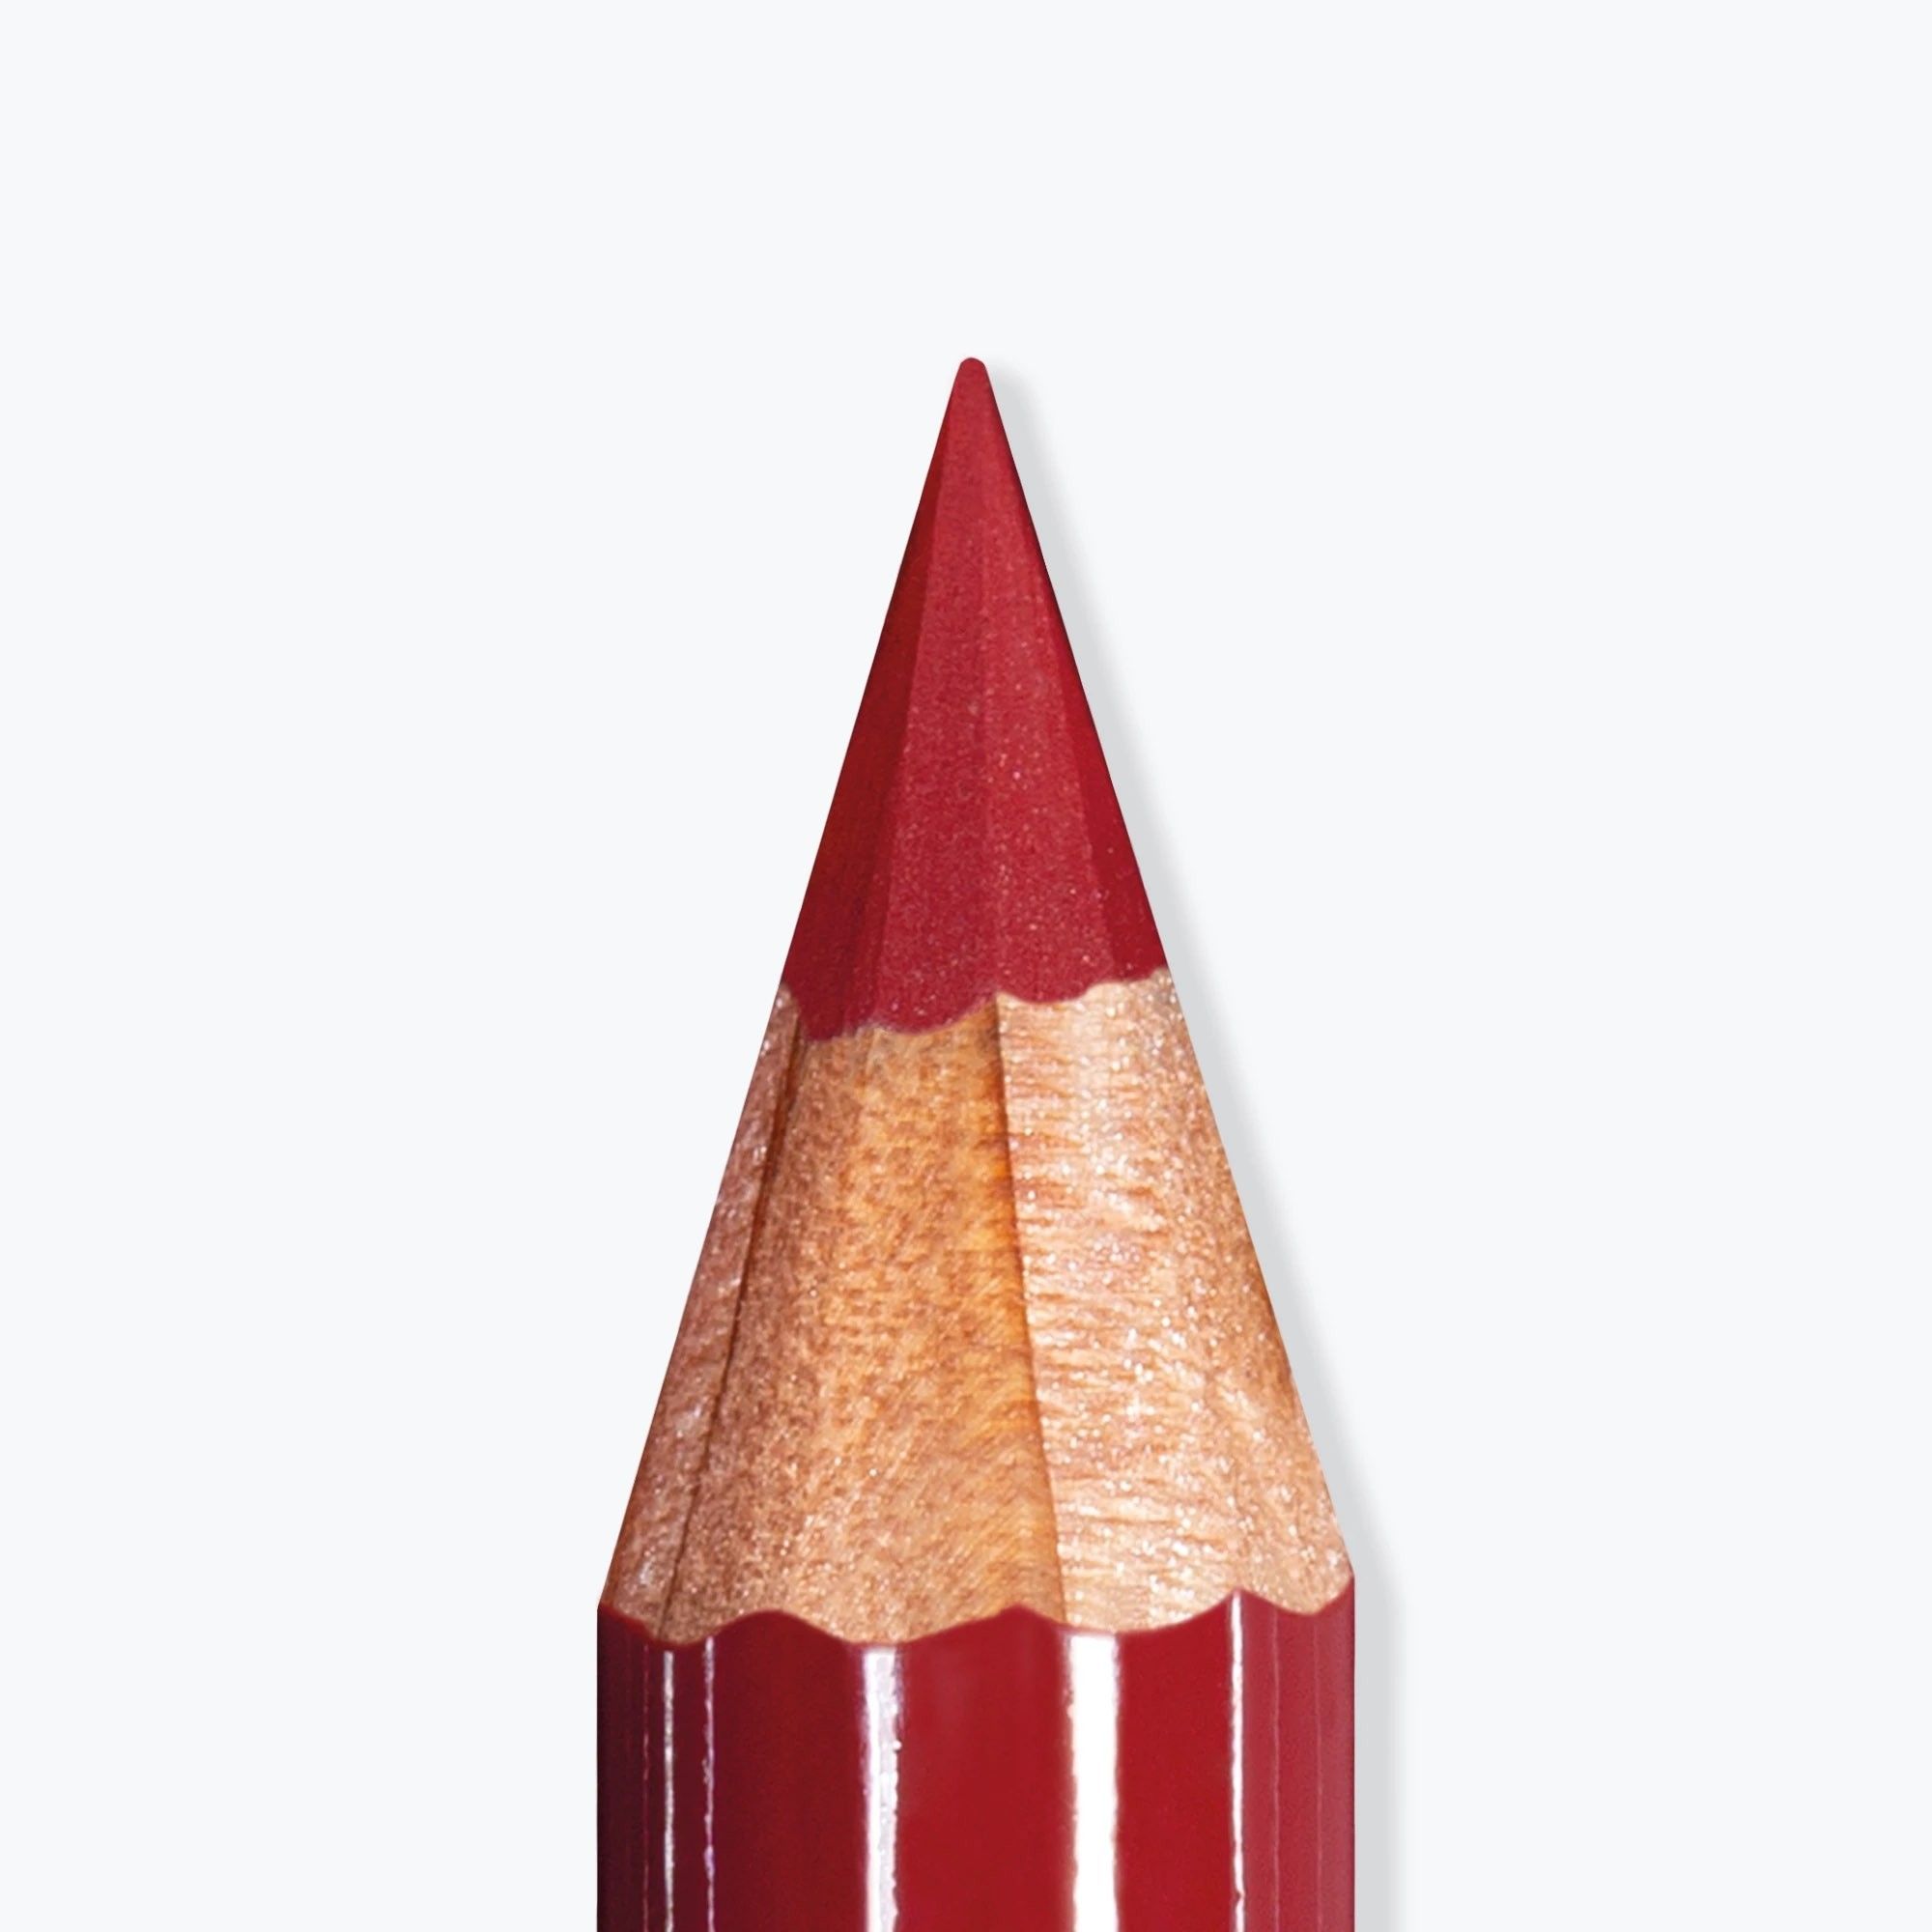 Artist Lips - Lip Pencil